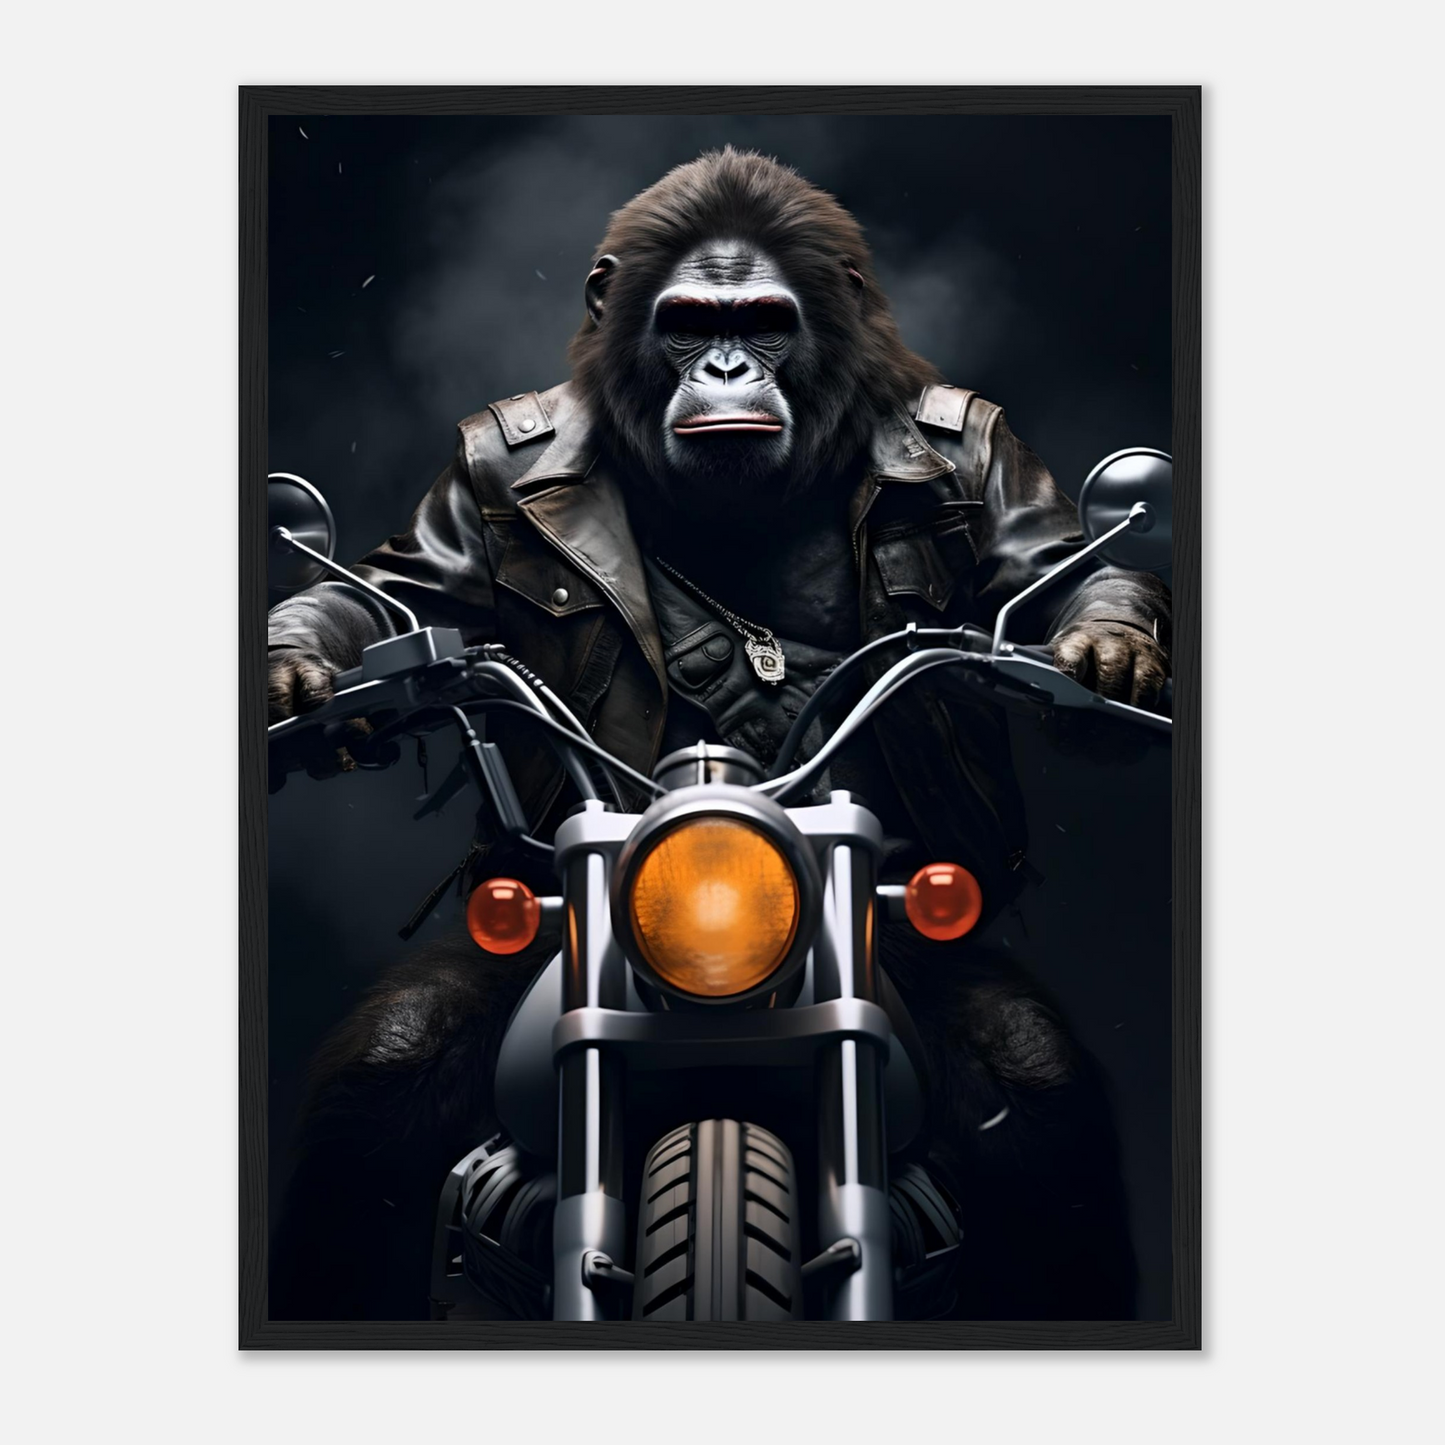 Motorbike Gorilla